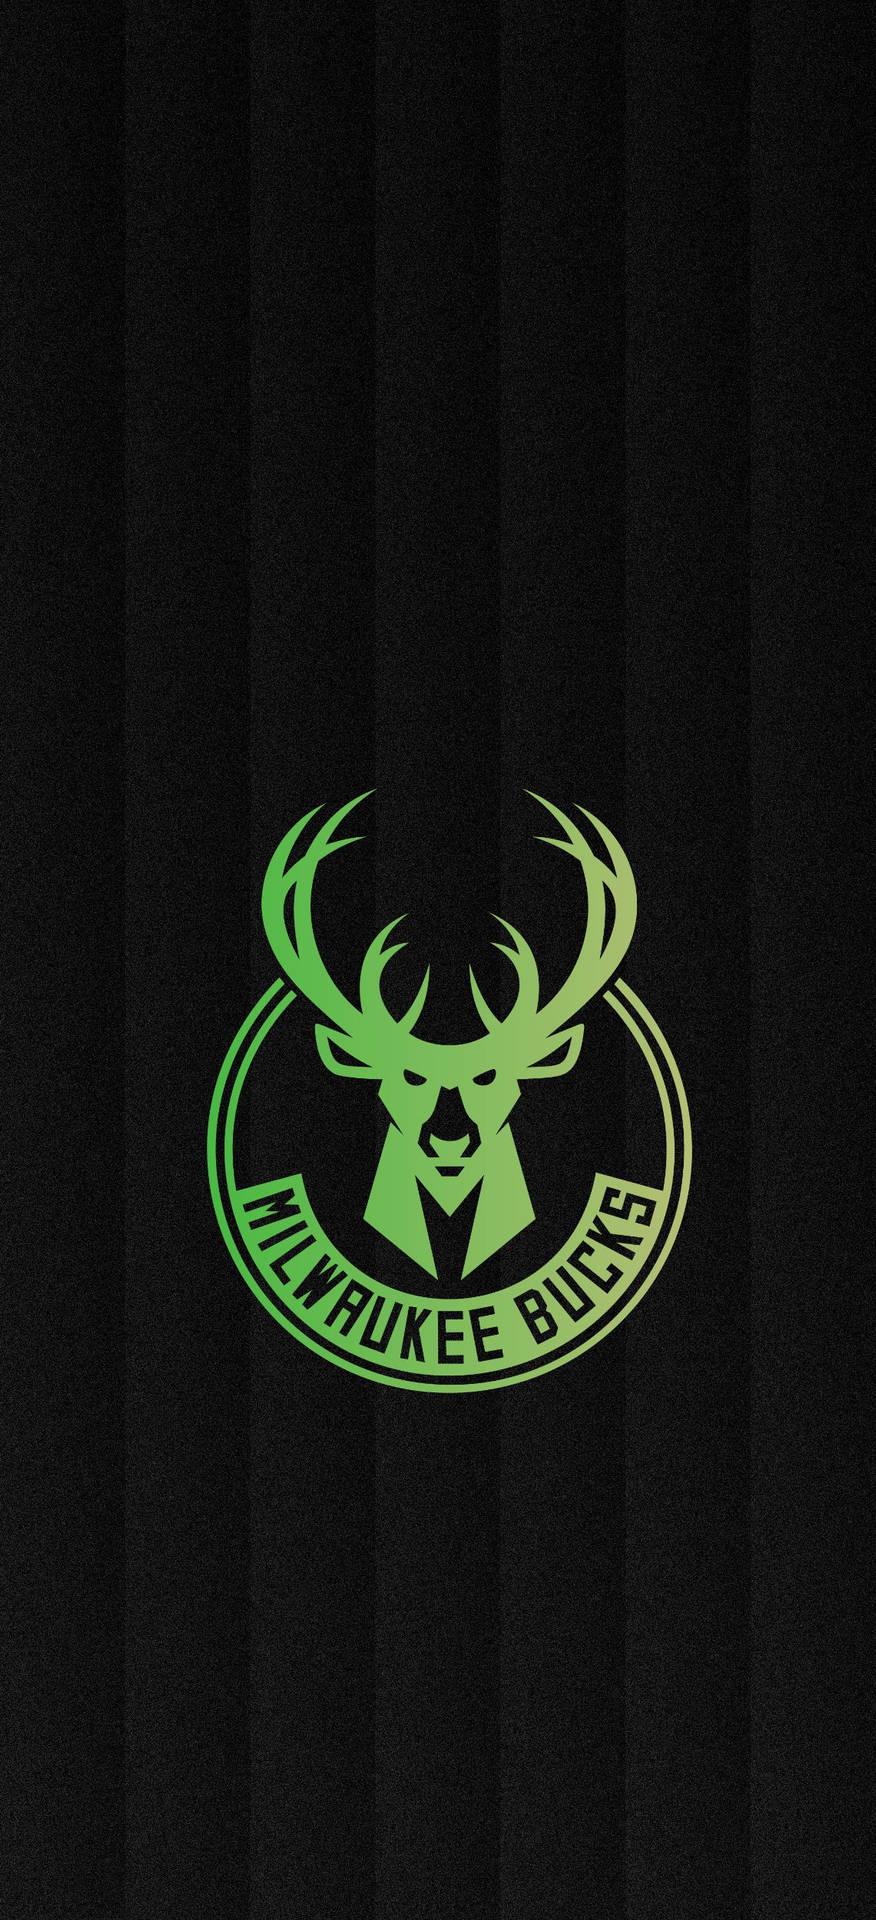 Milwaukeebucks Grünes Emblem Wallpaper